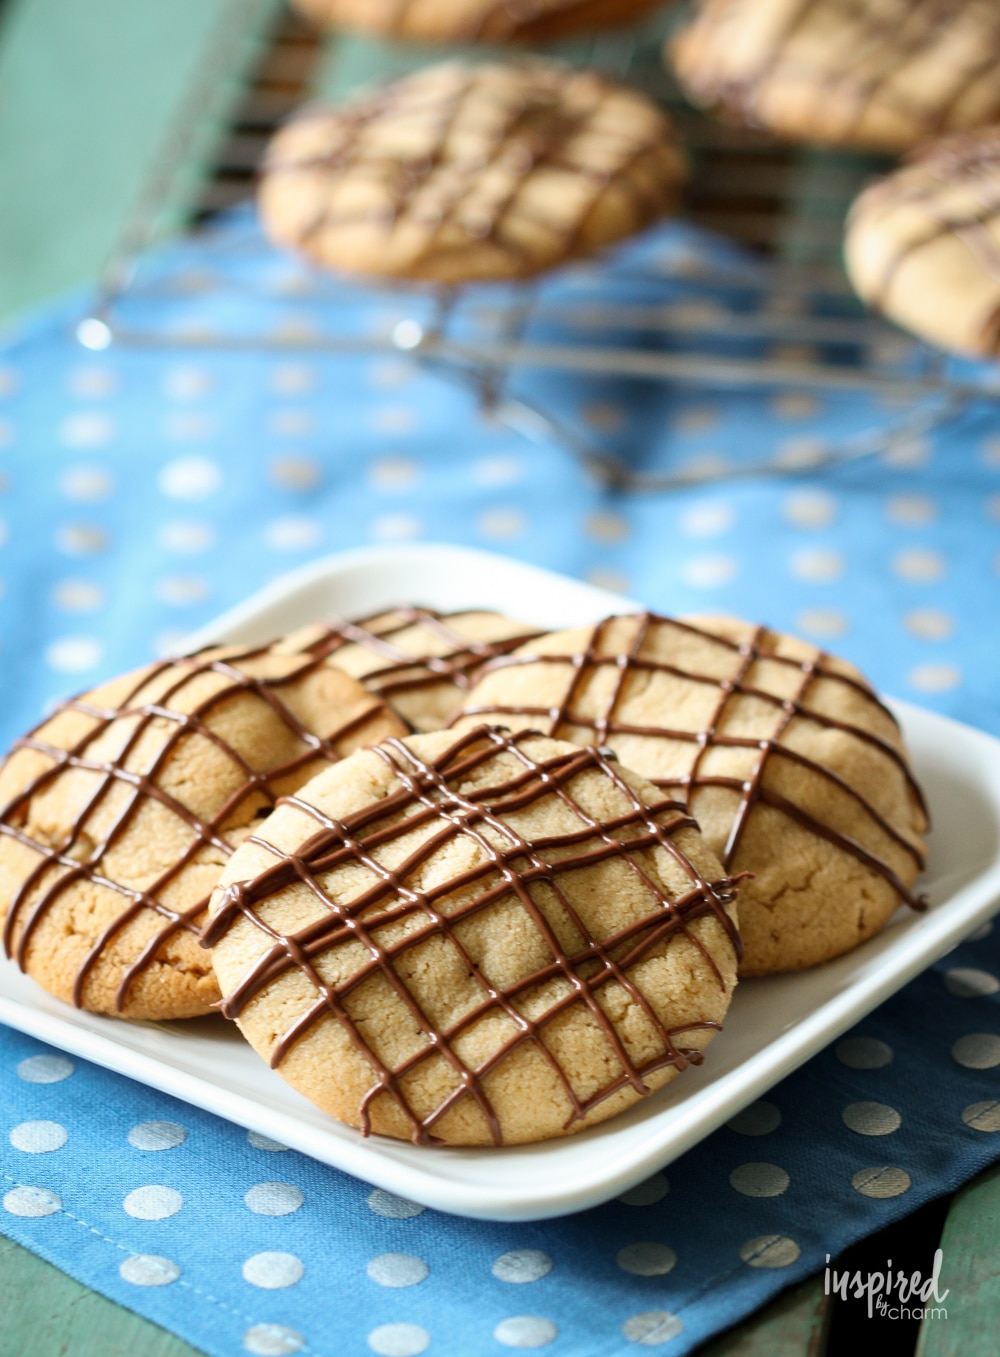 stuffed peanut butter cookies on a plate on a blue polka dot napkin.